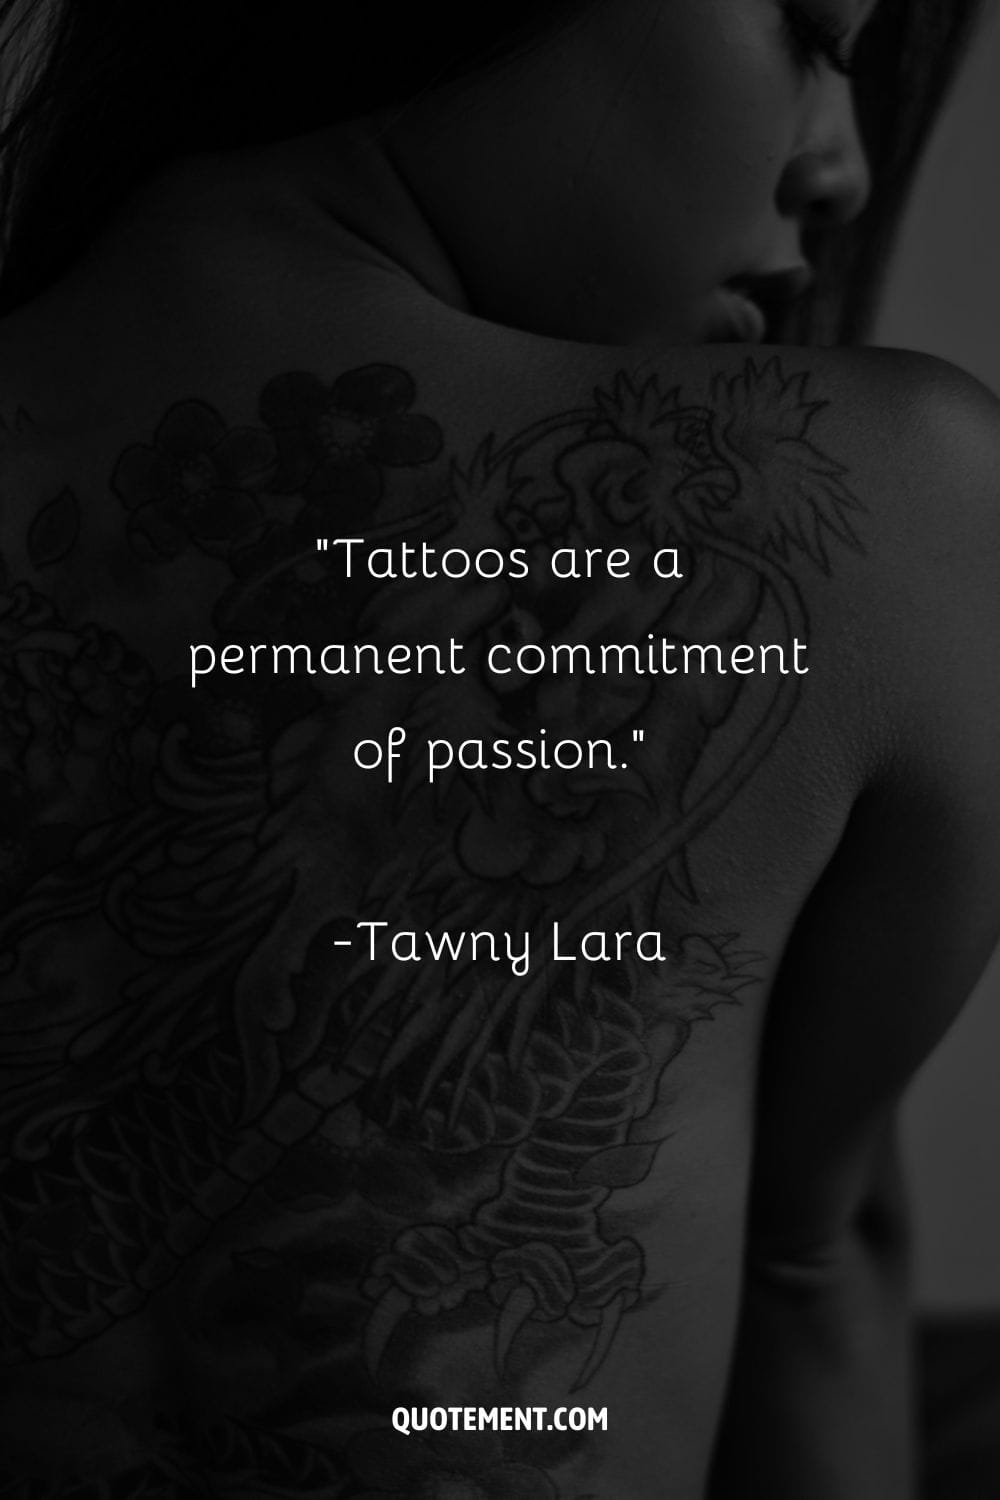 stunning tattoo art on a black woman's back